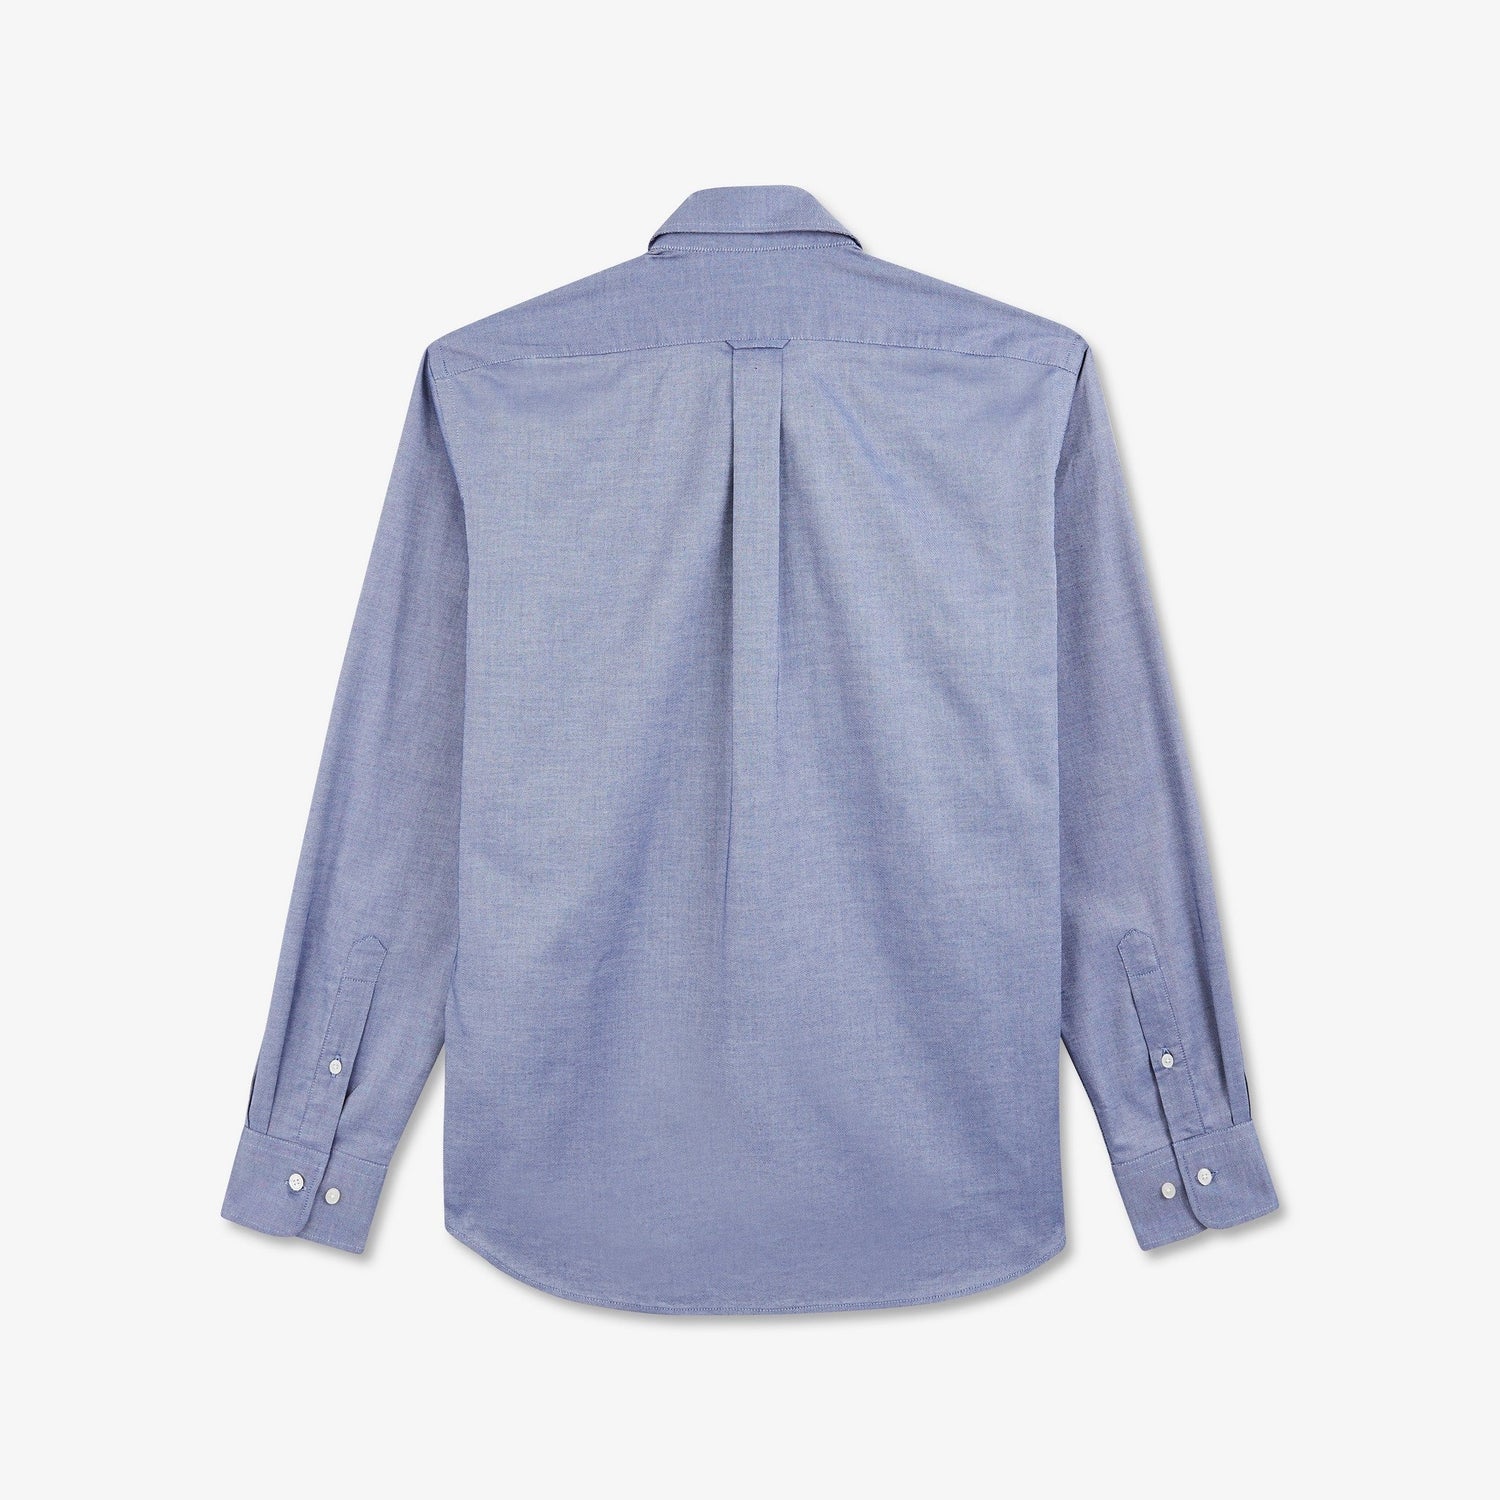 navy-blue-cotton-shirt_ppshiche0020_blf_05